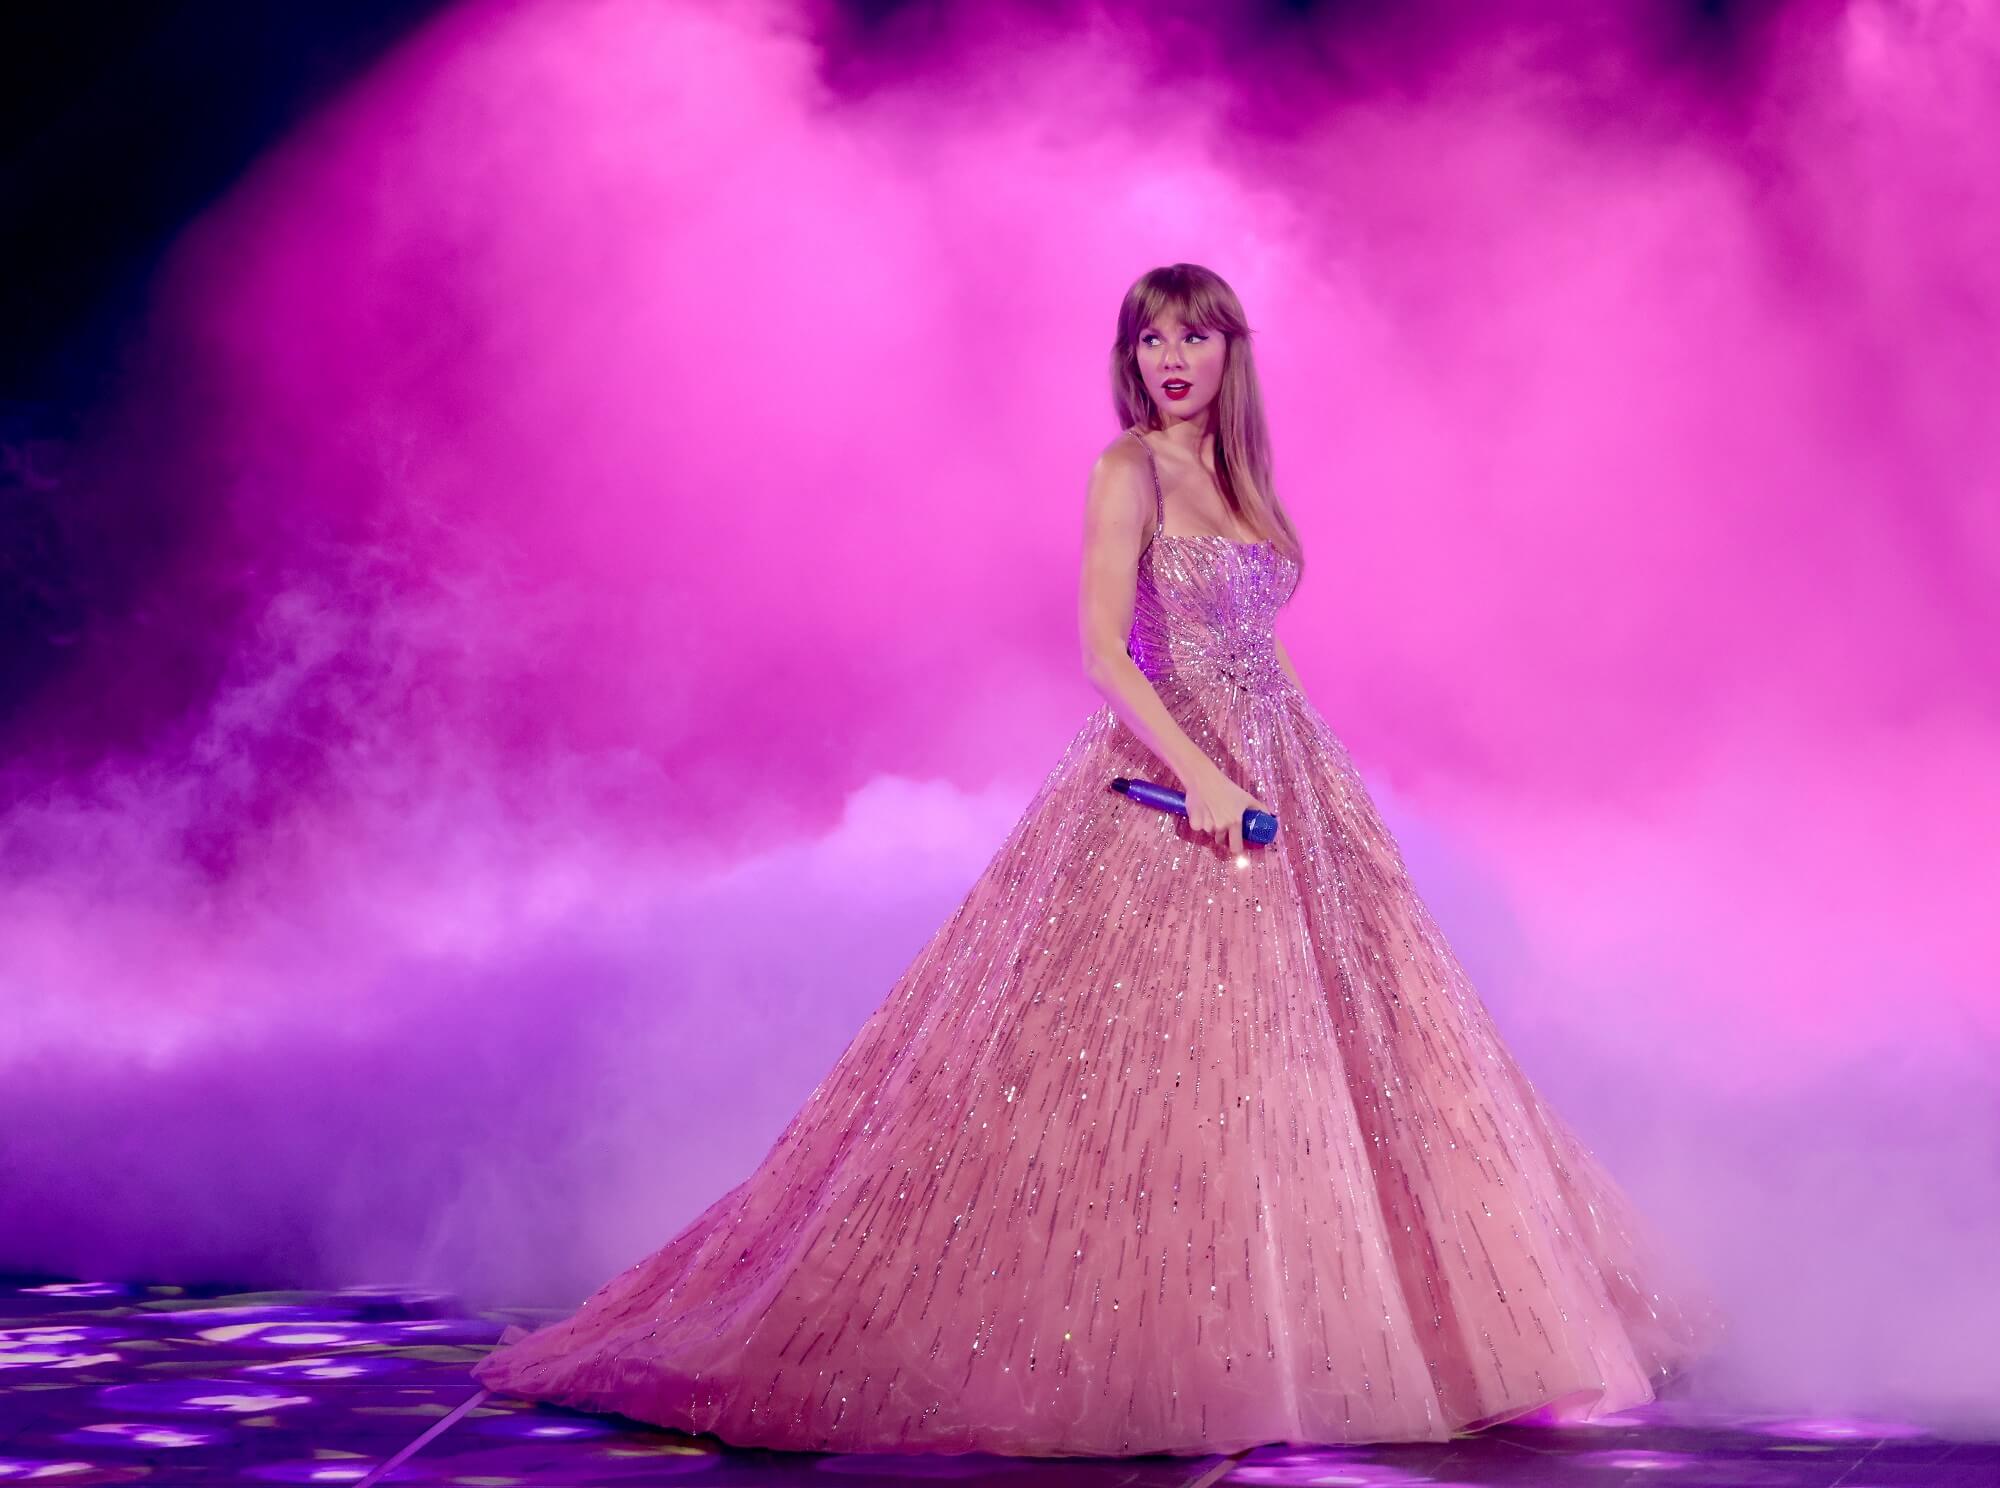 Dress Like Taylor Swift: Leaving a Recording Studio (March 3, 2019